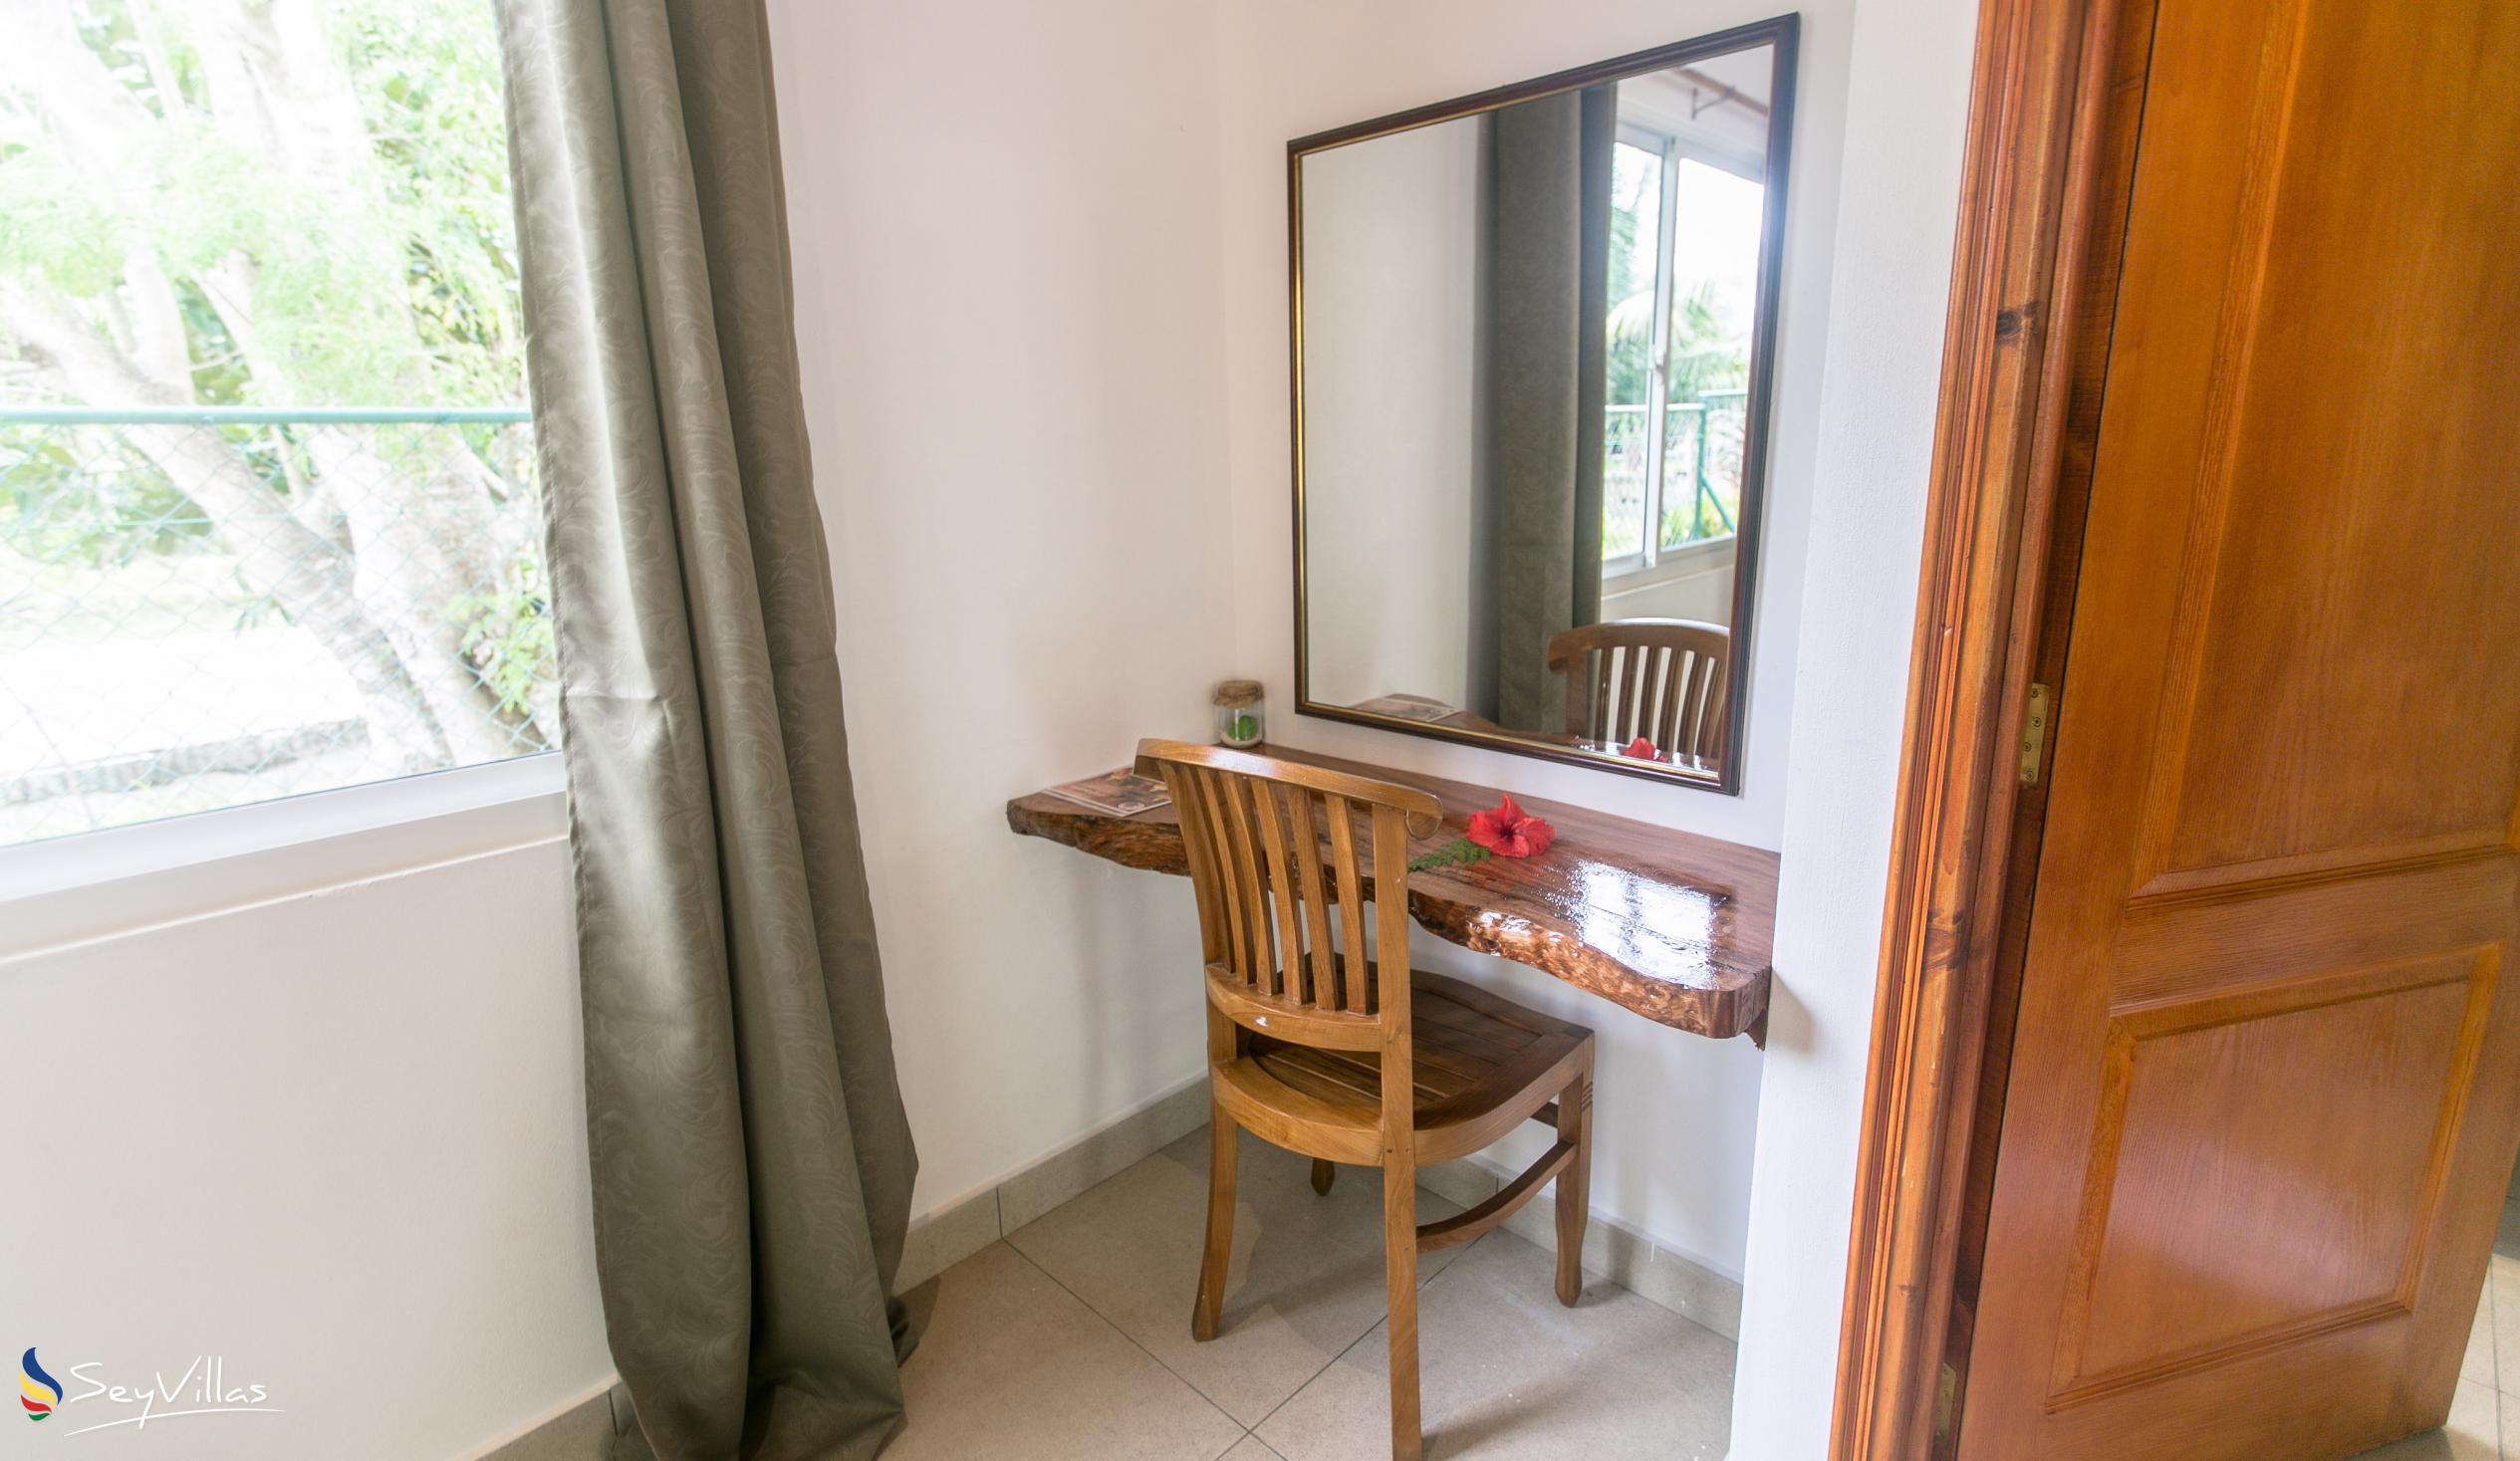 Photo 89: Pension Fidele - Koko ver & Koko rouz Apartments - La Digue (Seychelles)